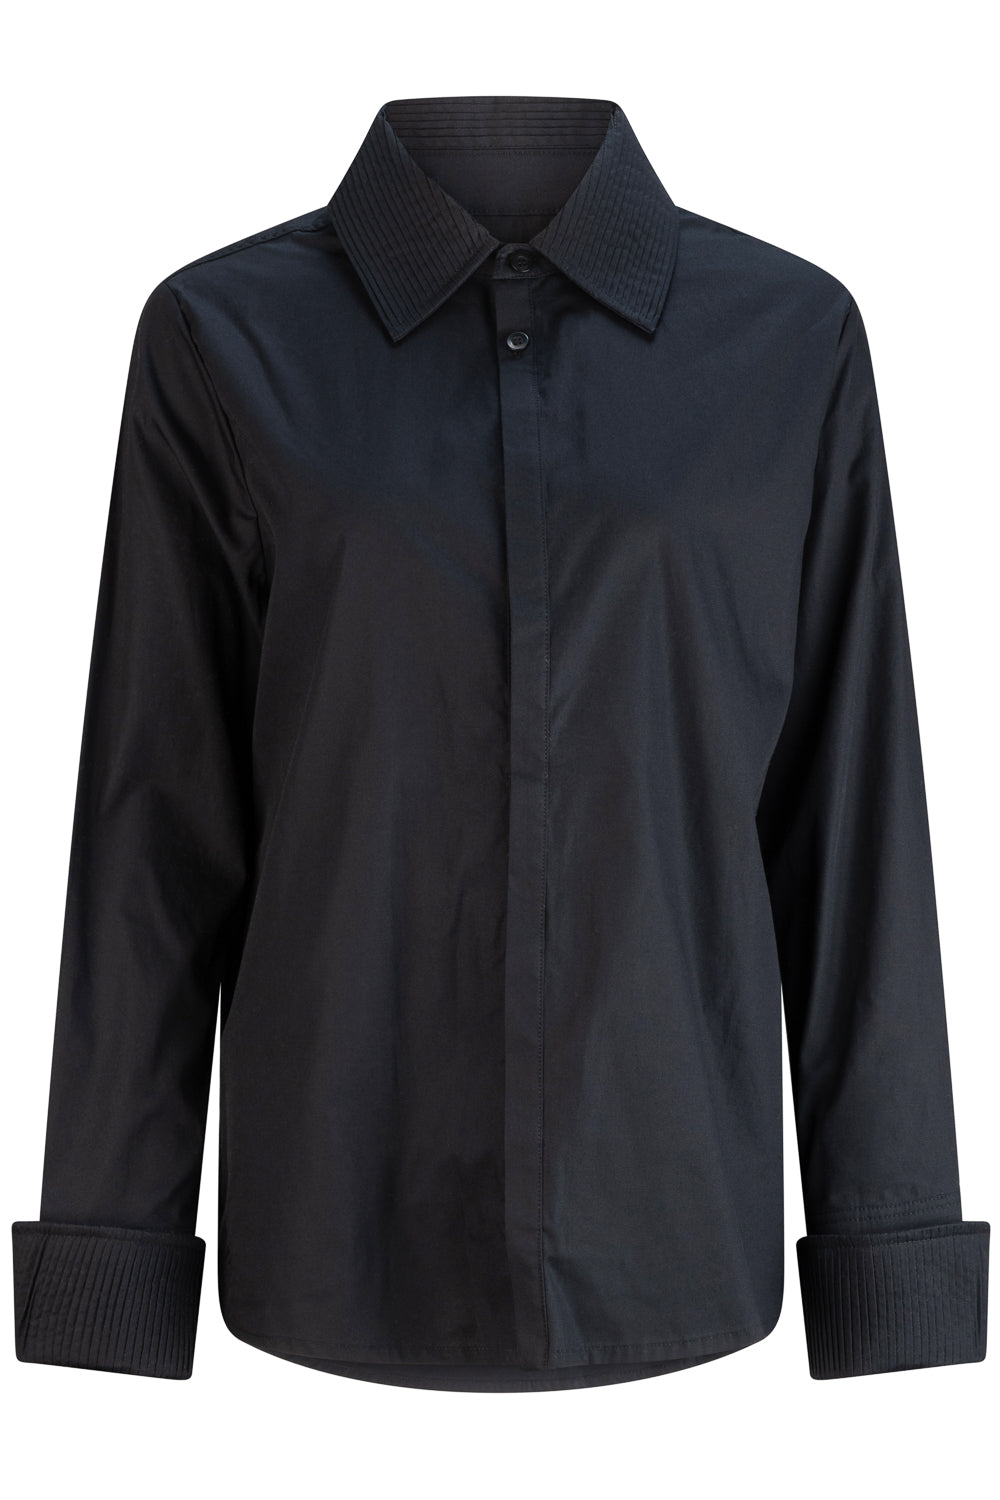 Dref By D Women's Ontario Cotton Shirt - Black